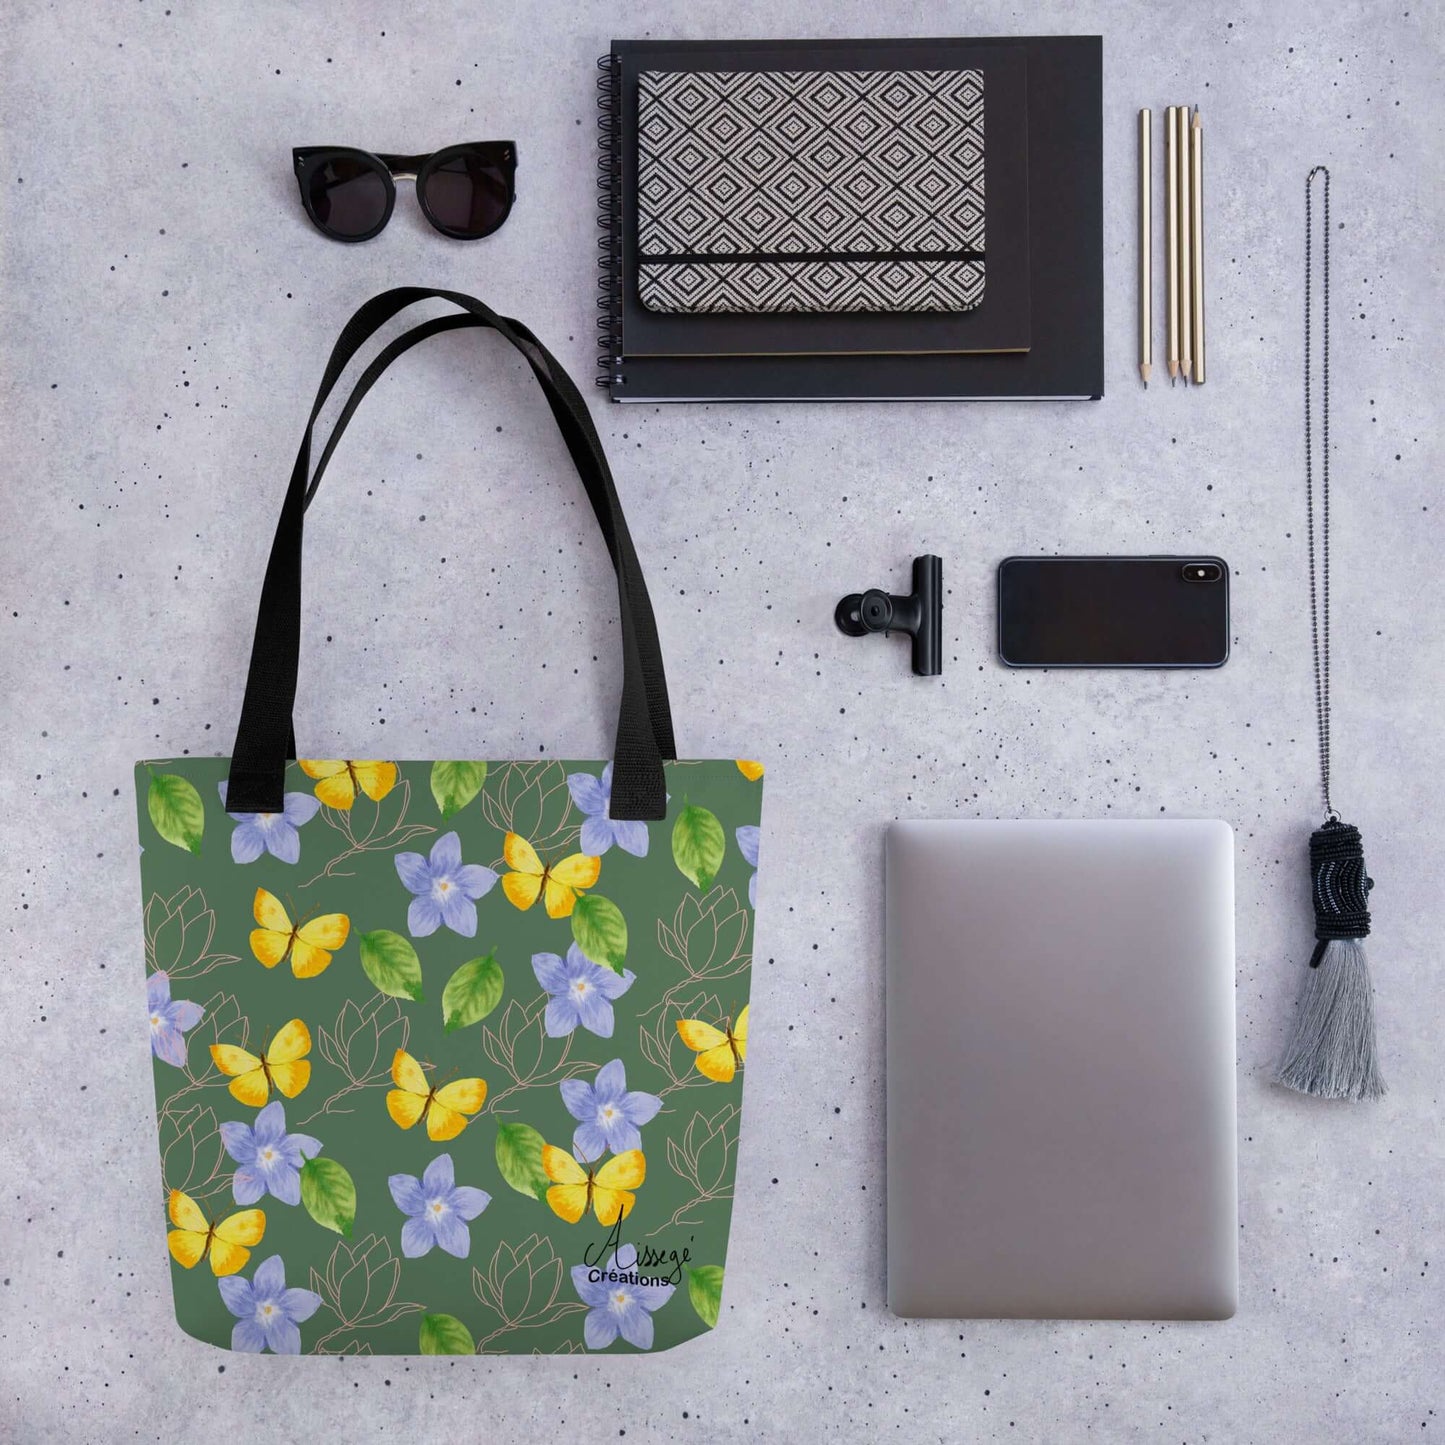 “Green Spring” tote bag